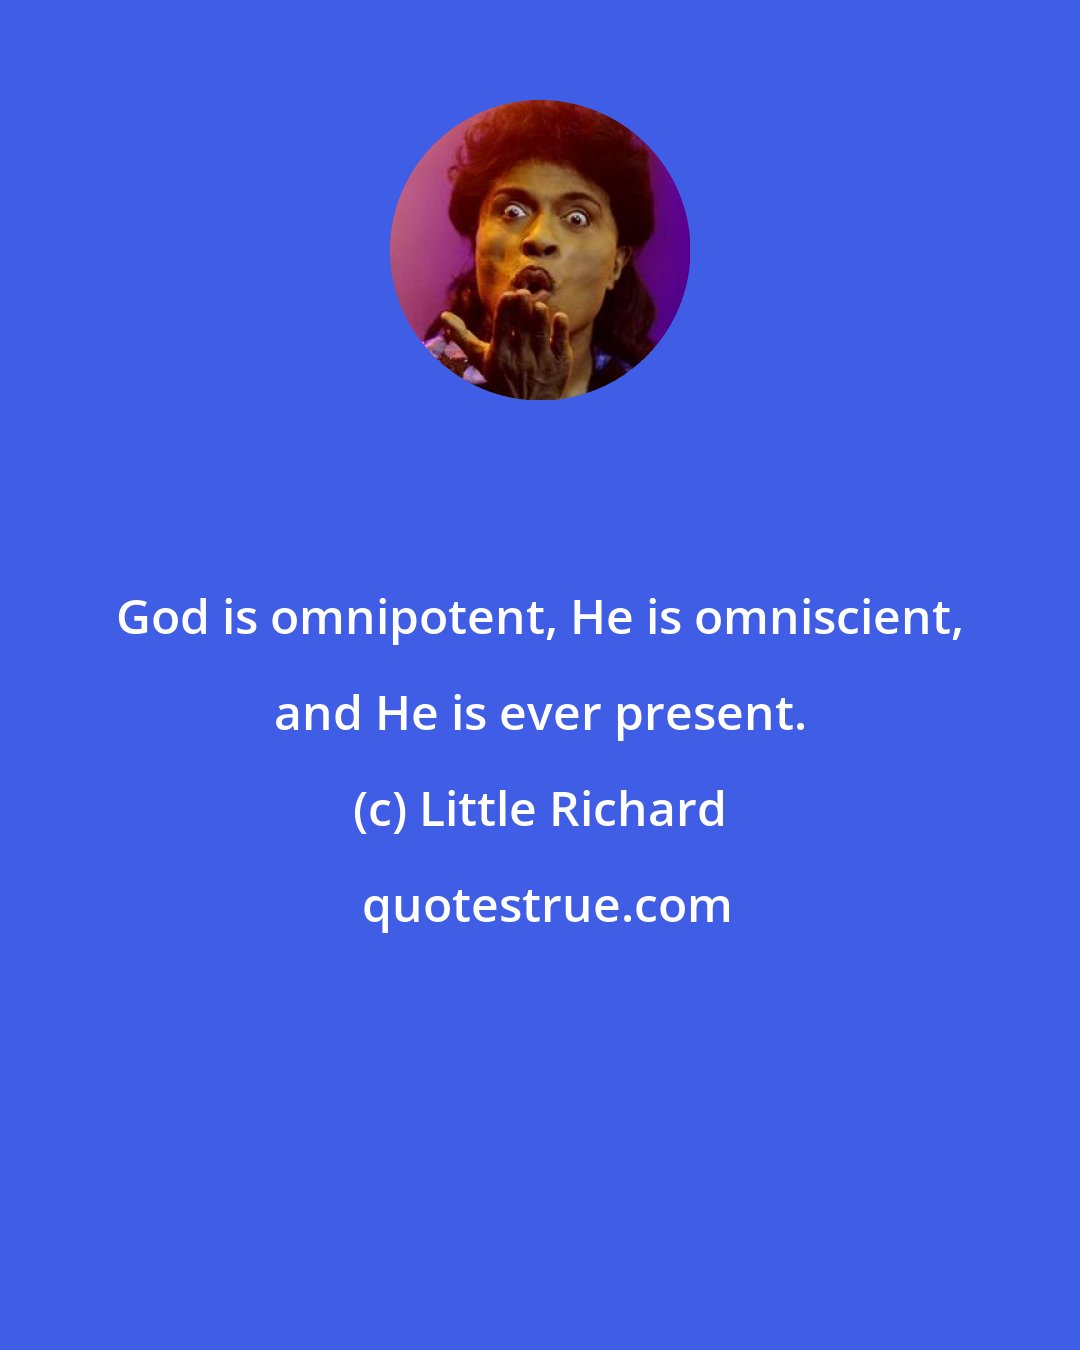 Little Richard: God is omnipotent, He is omniscient, and He is ever present.